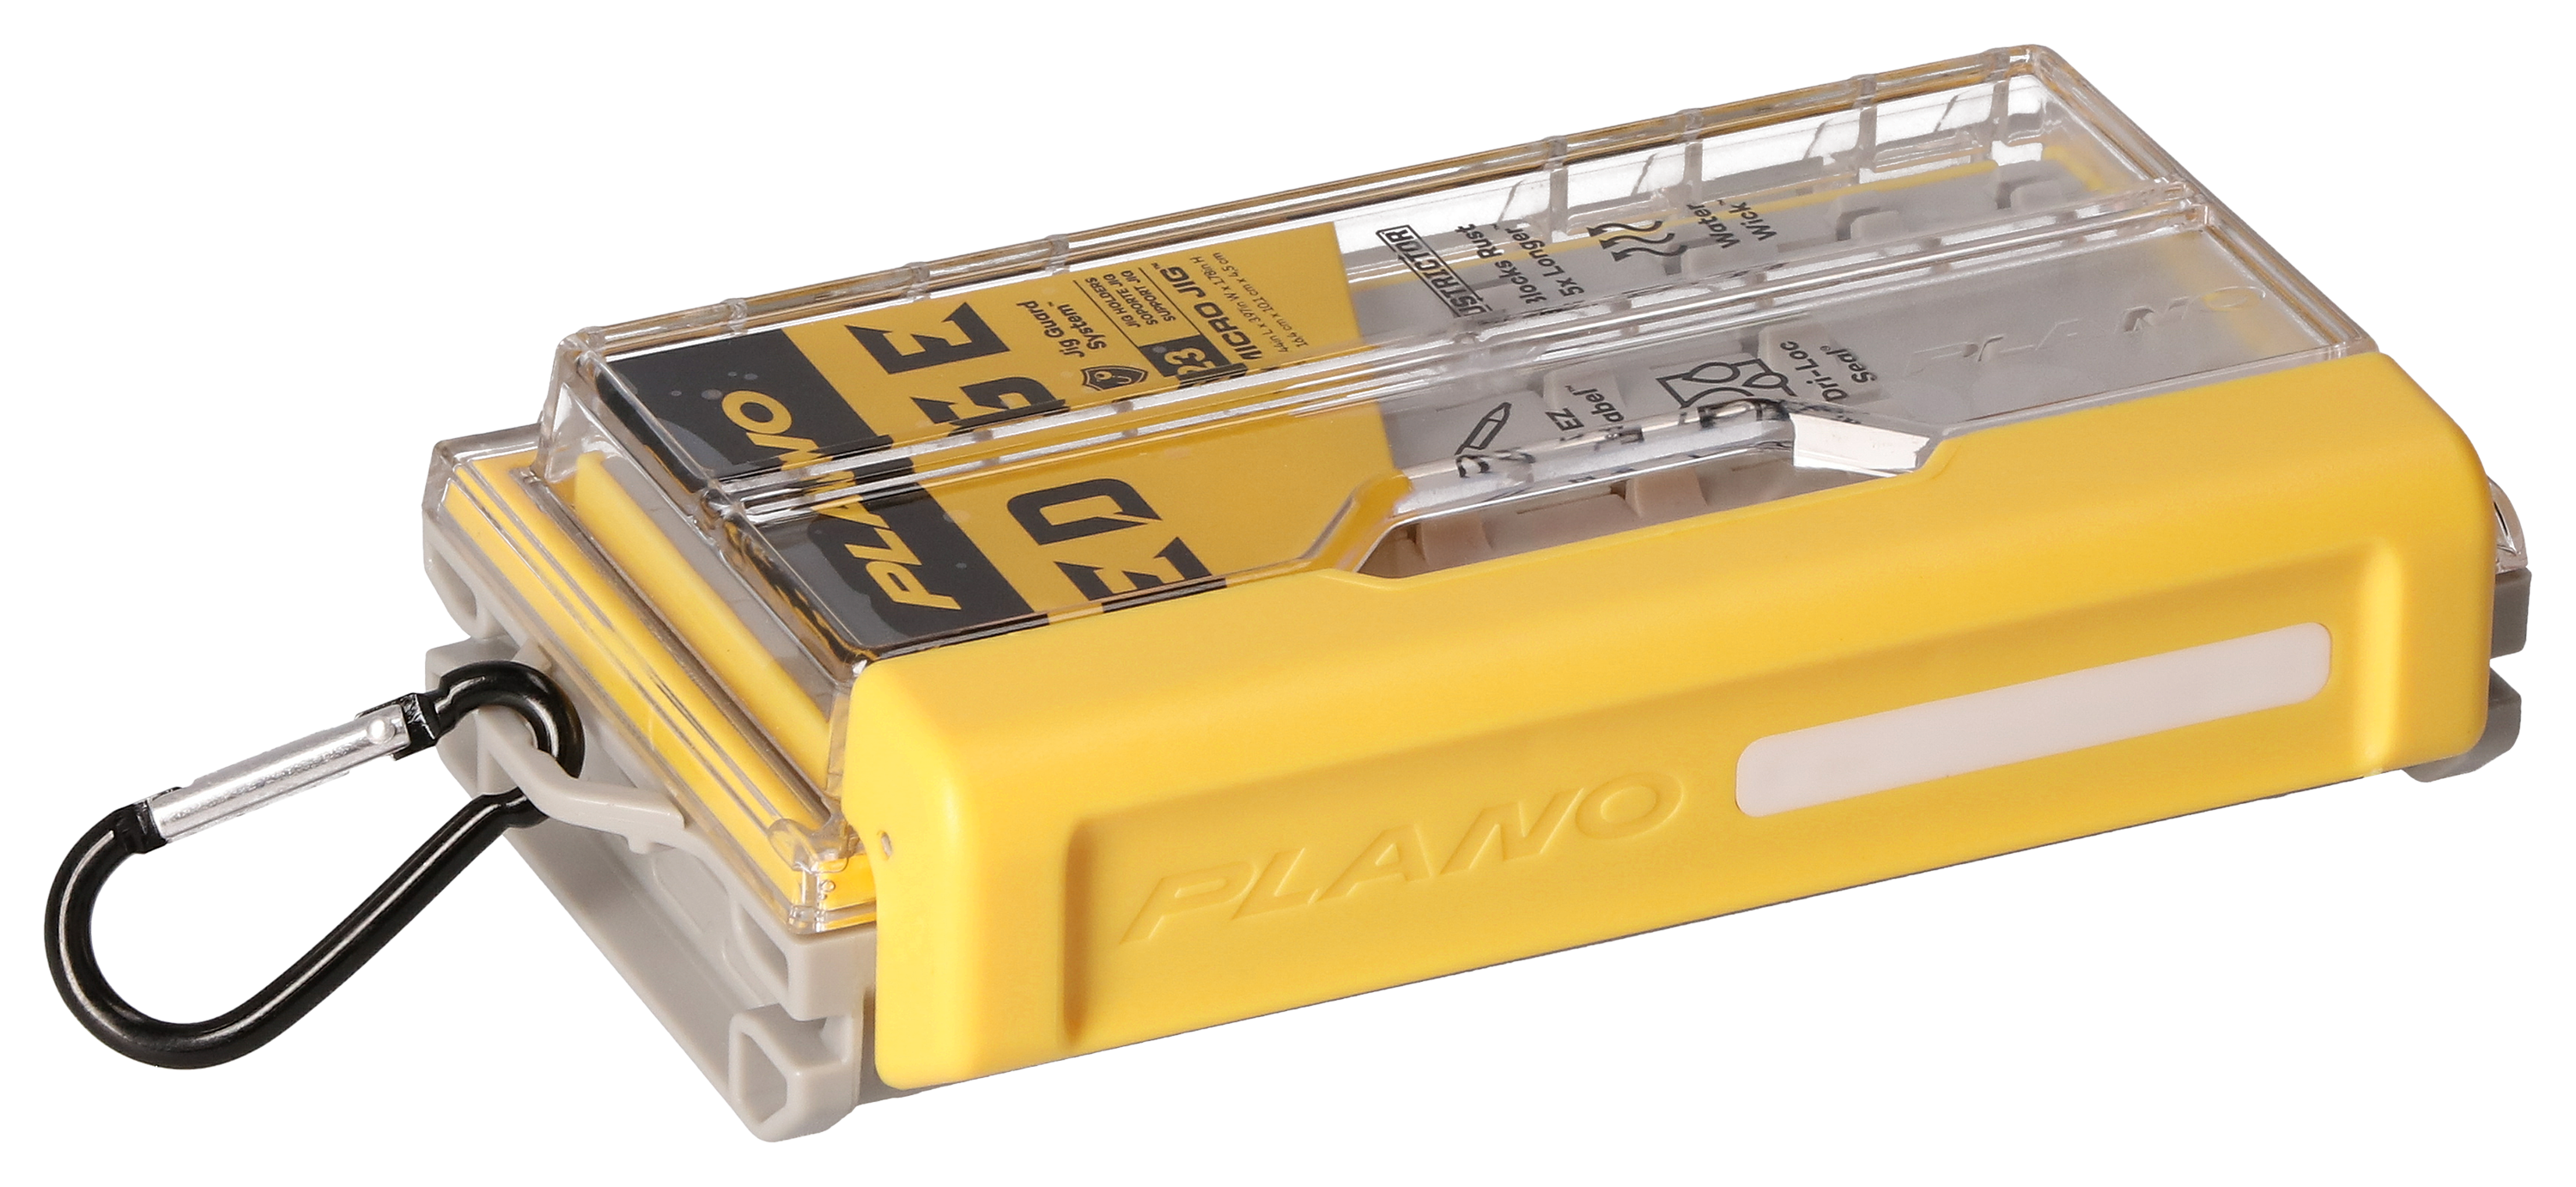 Plano Edge Micro Jig Box from